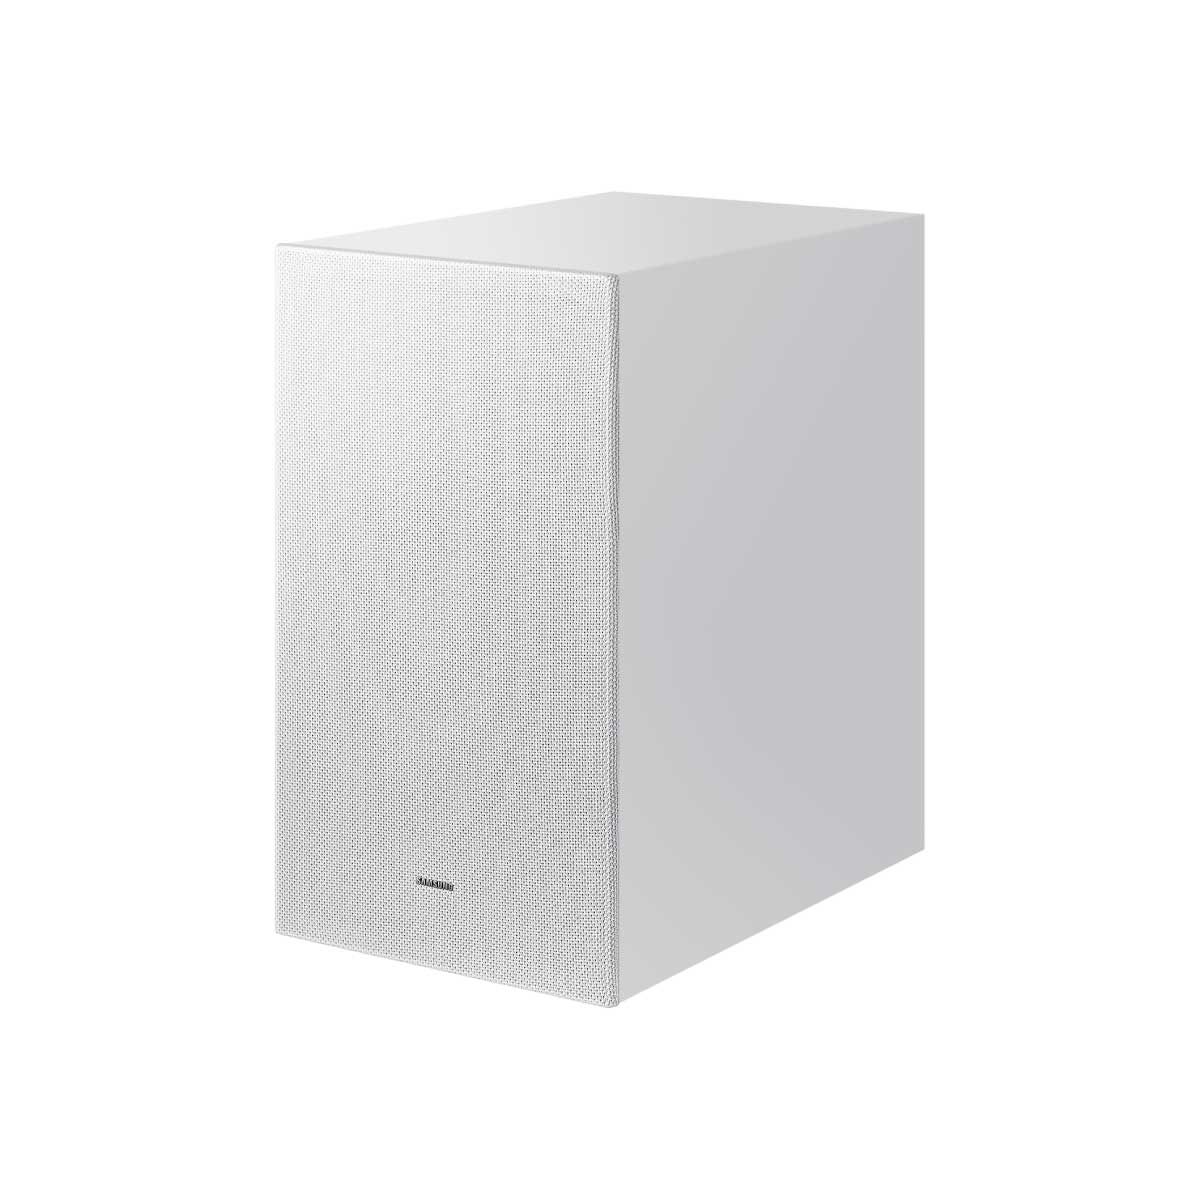 SAMSUNG Soundbar Ultra Slim ชุดลำโพงซาวด์บาร์ รุ่น HW-S701D/XT สีขาว WHITE